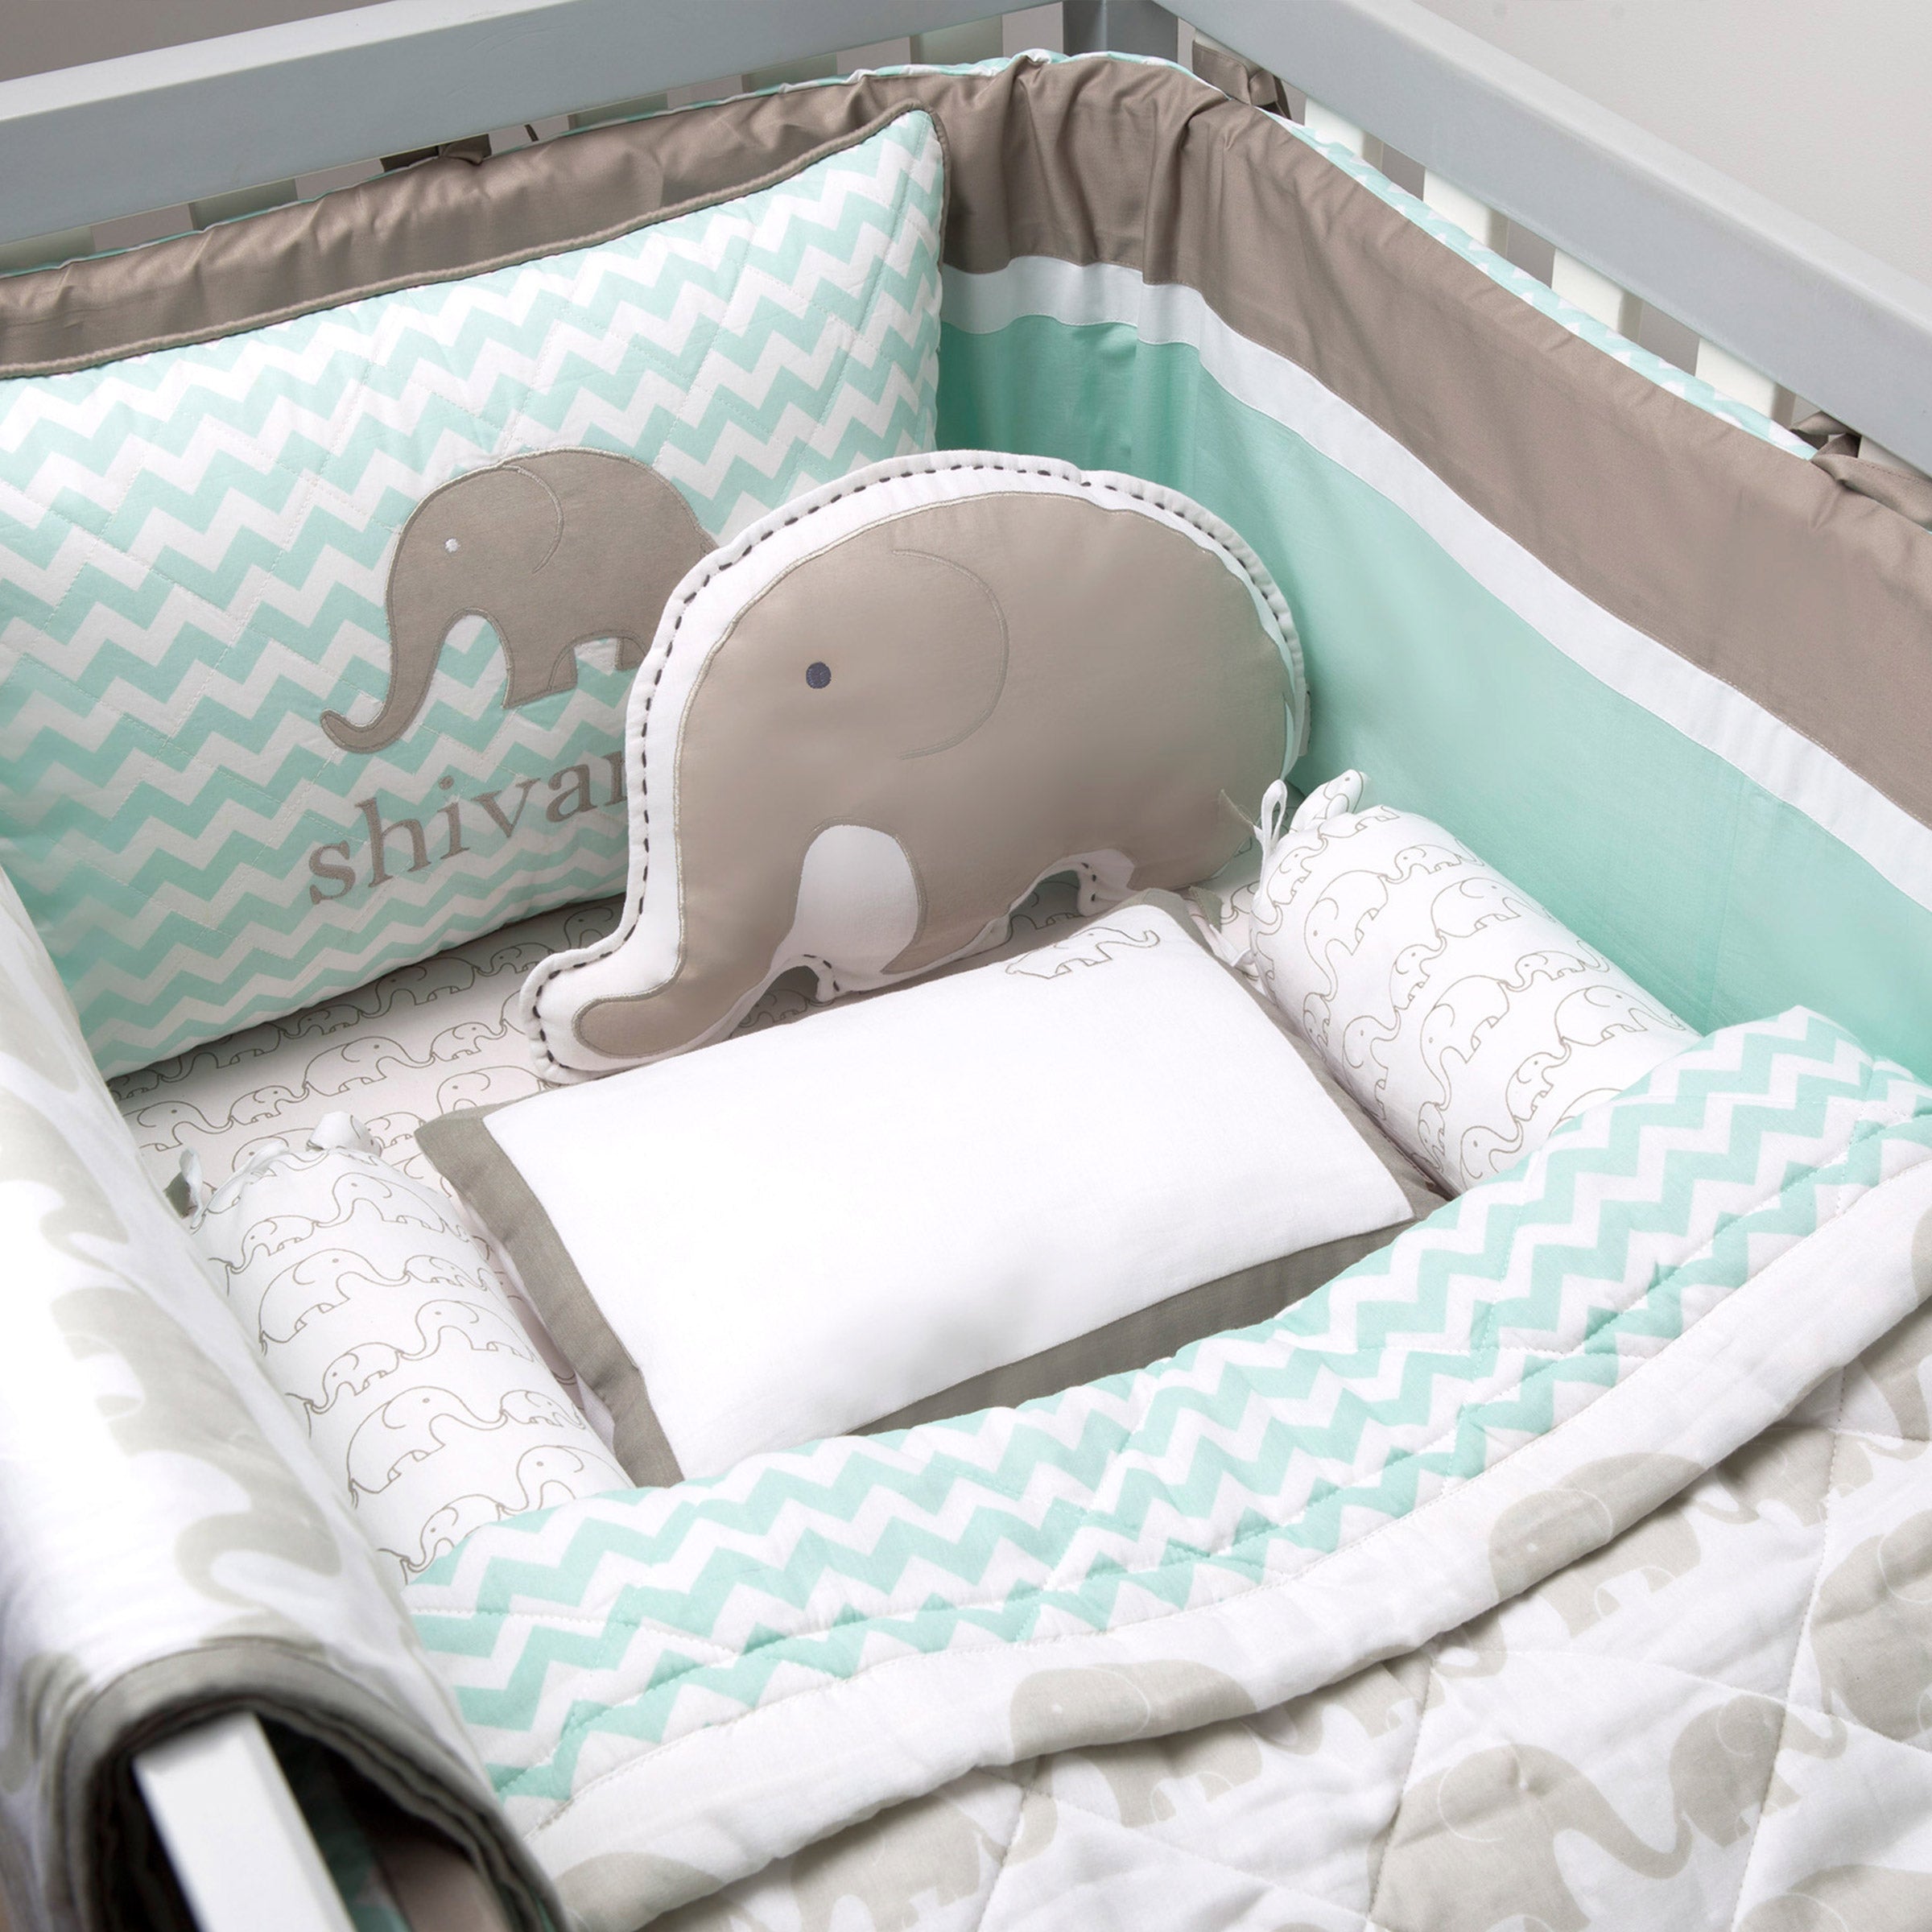 elephant cot bedding sets